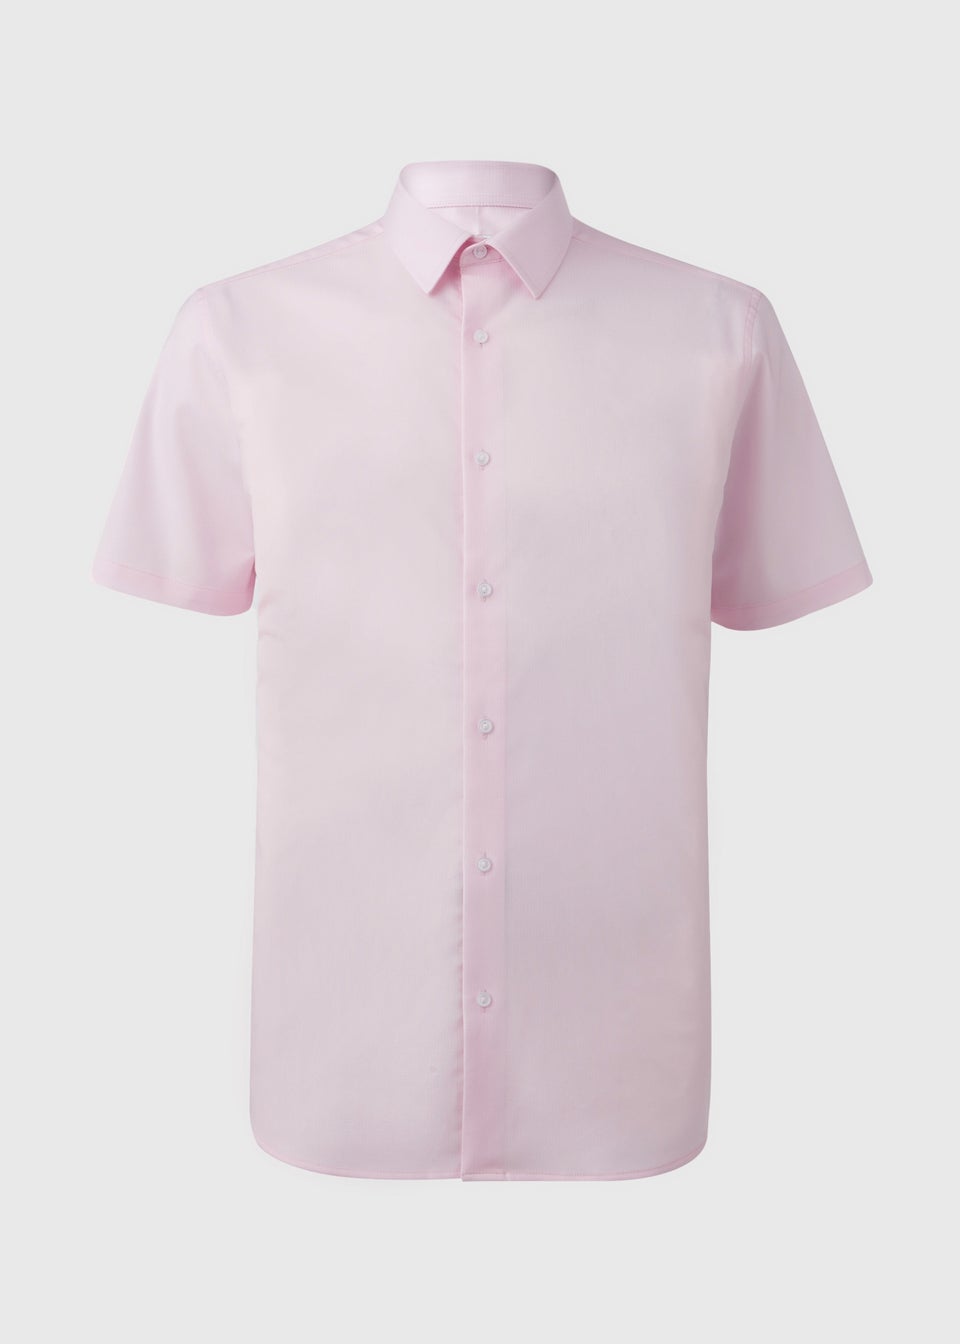 Taylor & Wright Pink Textured Shirt